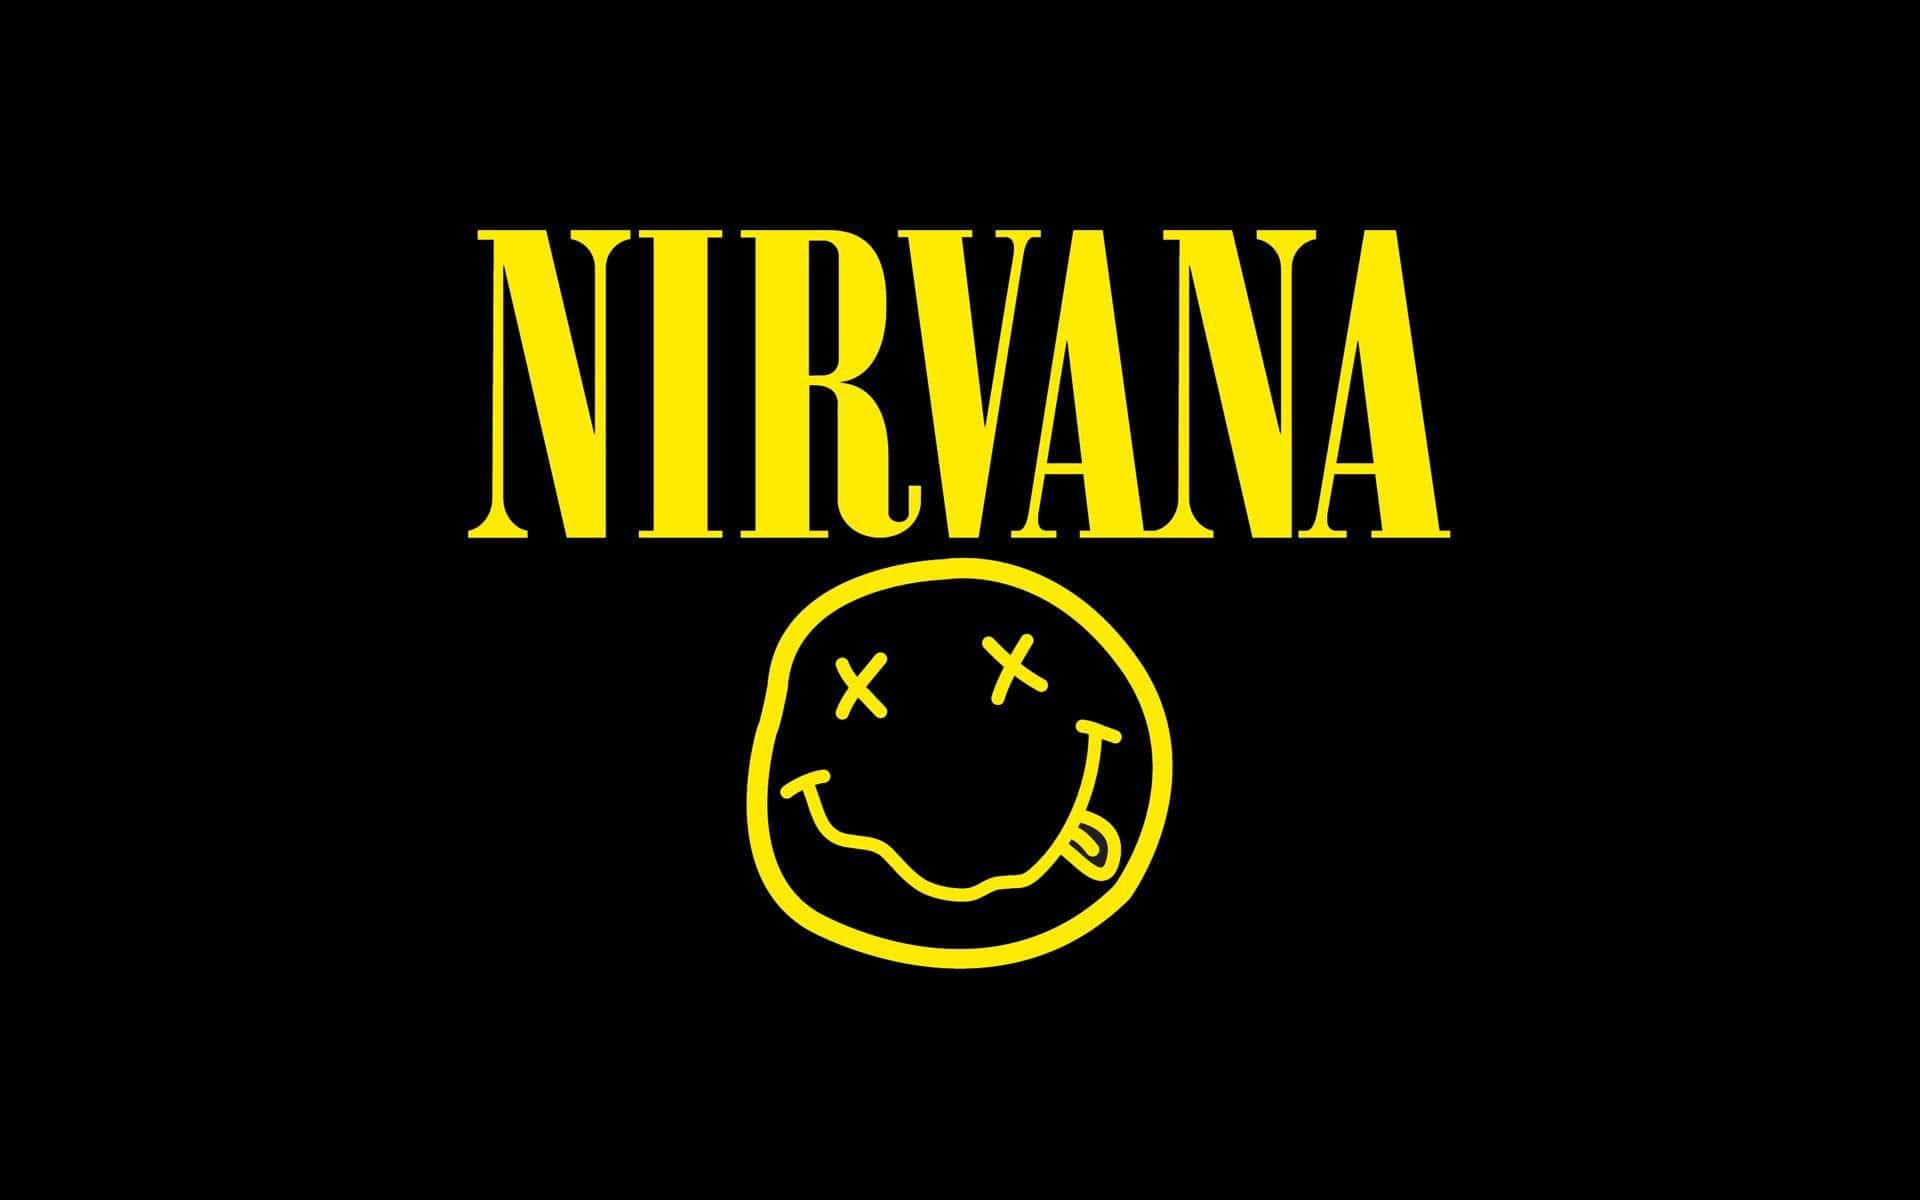 Nirvana1920 X 1200 Baggrund.